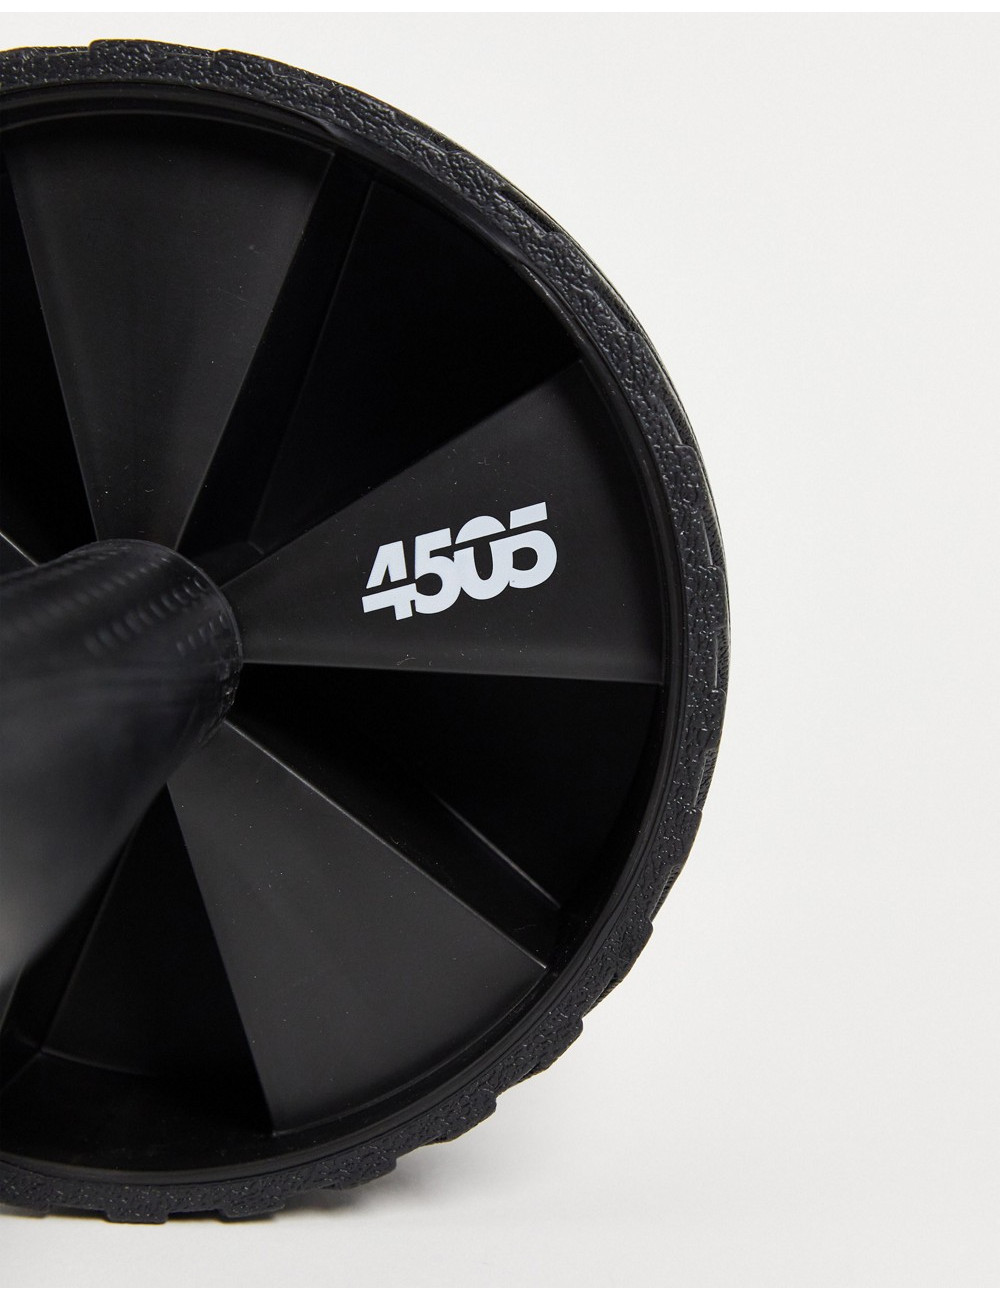 ASOS 4505 ab wheel in black